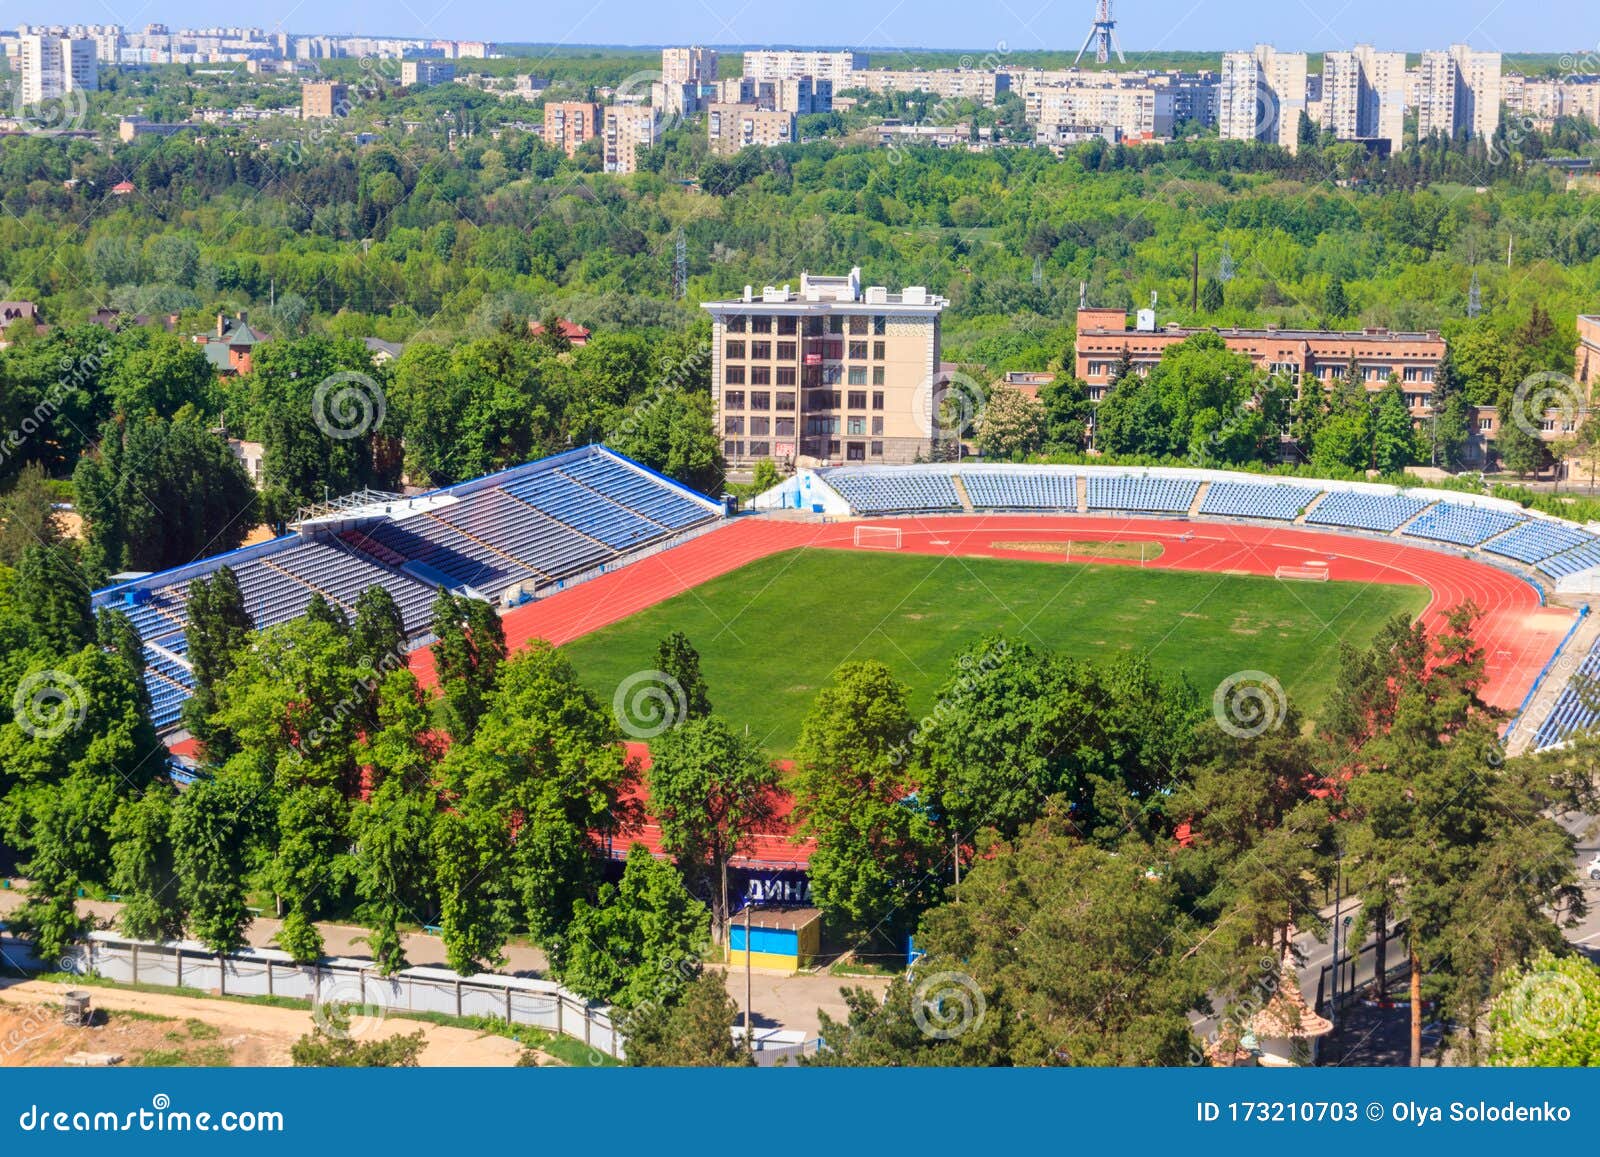 aerial view of dynamo stadium in kharkiv, ukraine